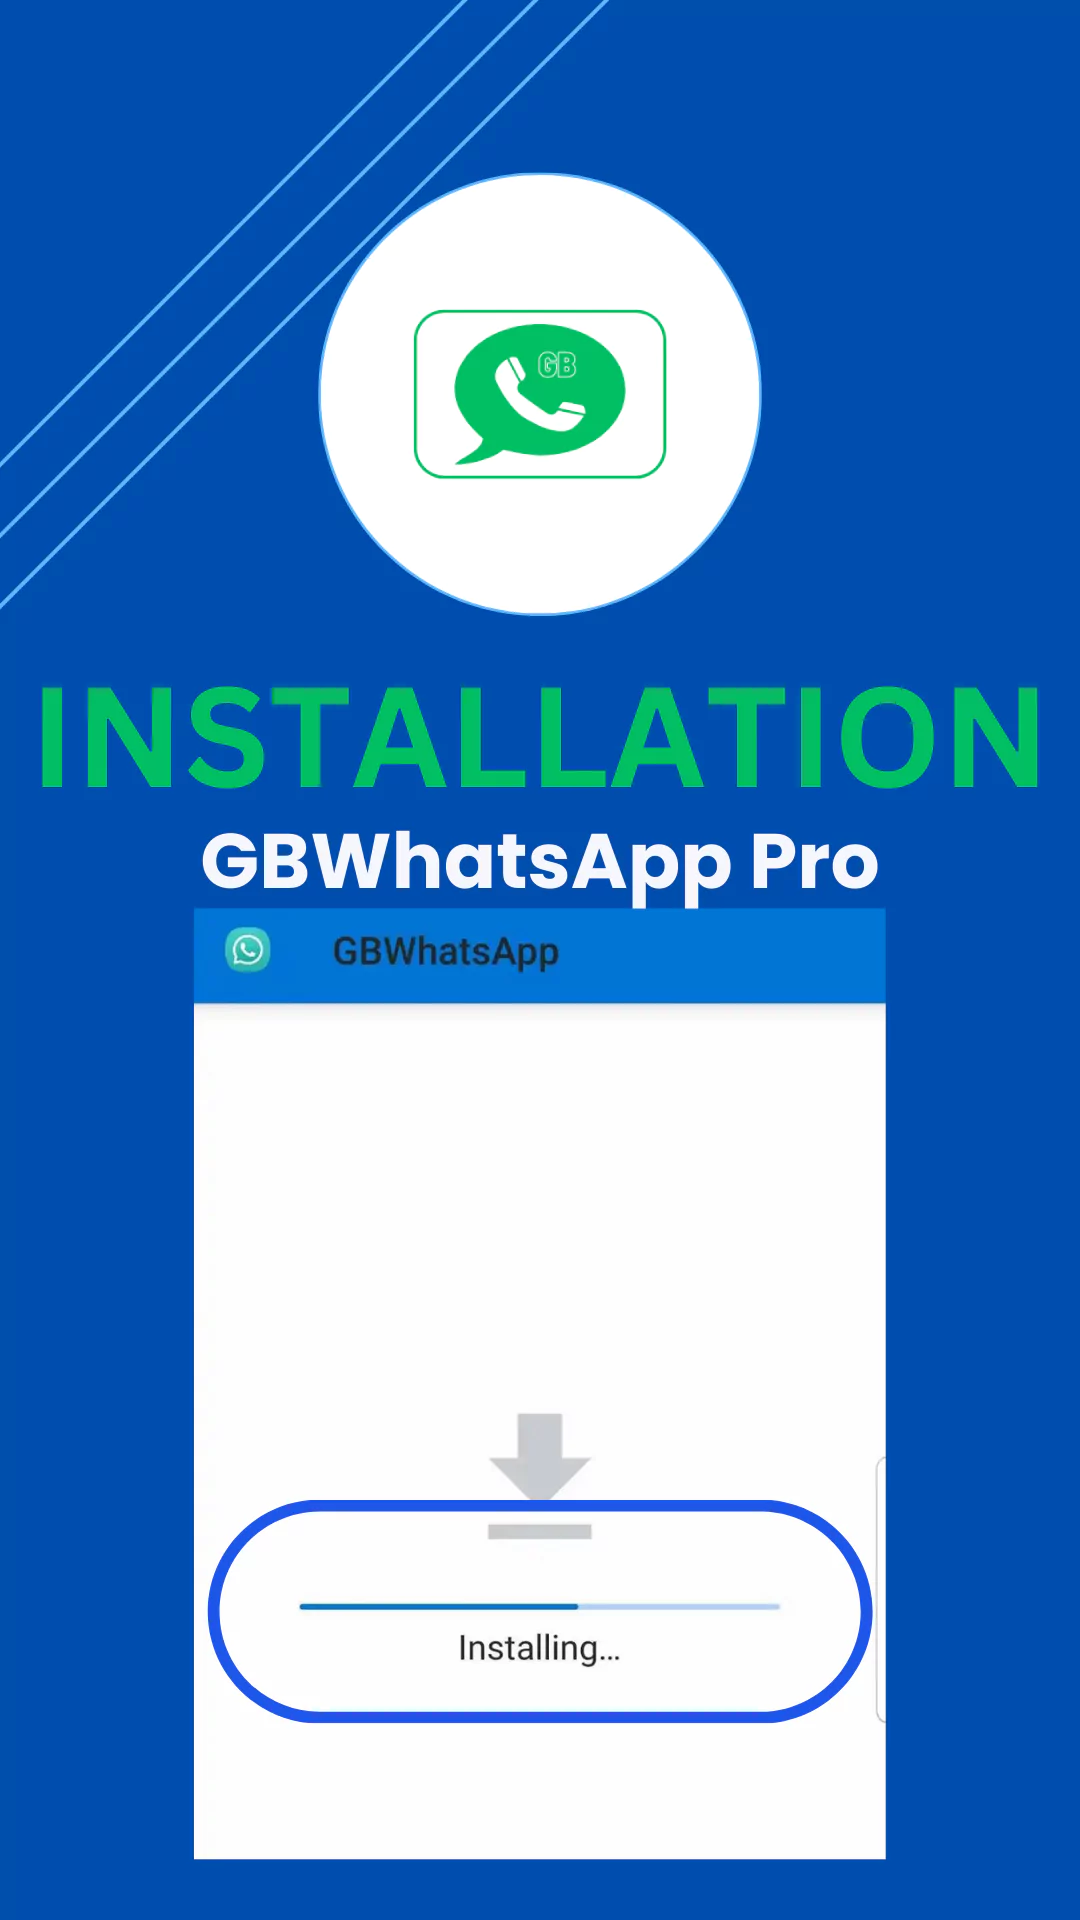 gb-whatsapp-pro-download-notification